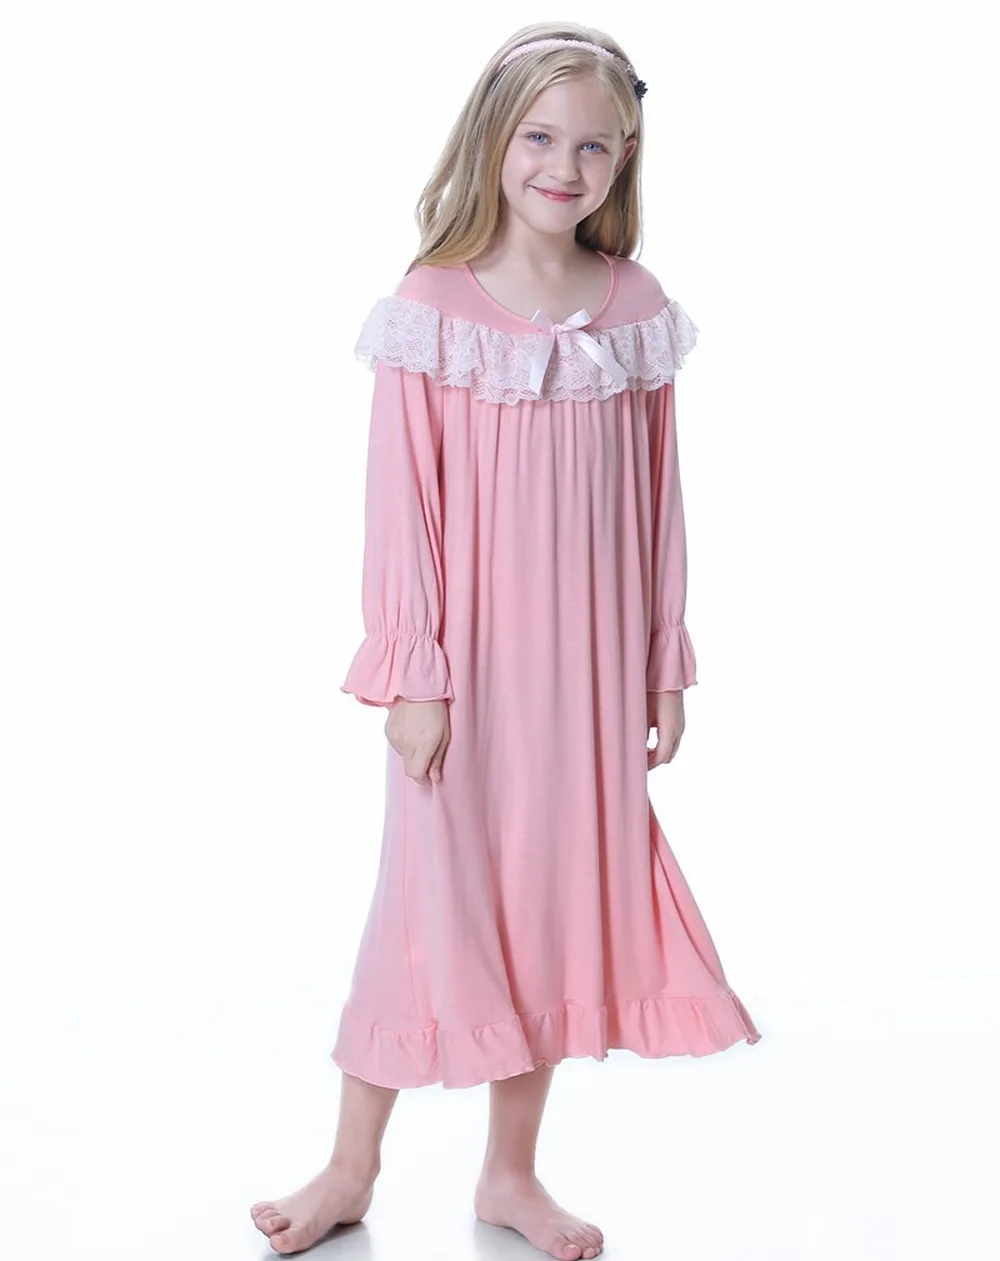 Nightgowns for Girls Kids Pajamas Princess Dress Sleepwear Night Gown 3-10 Years